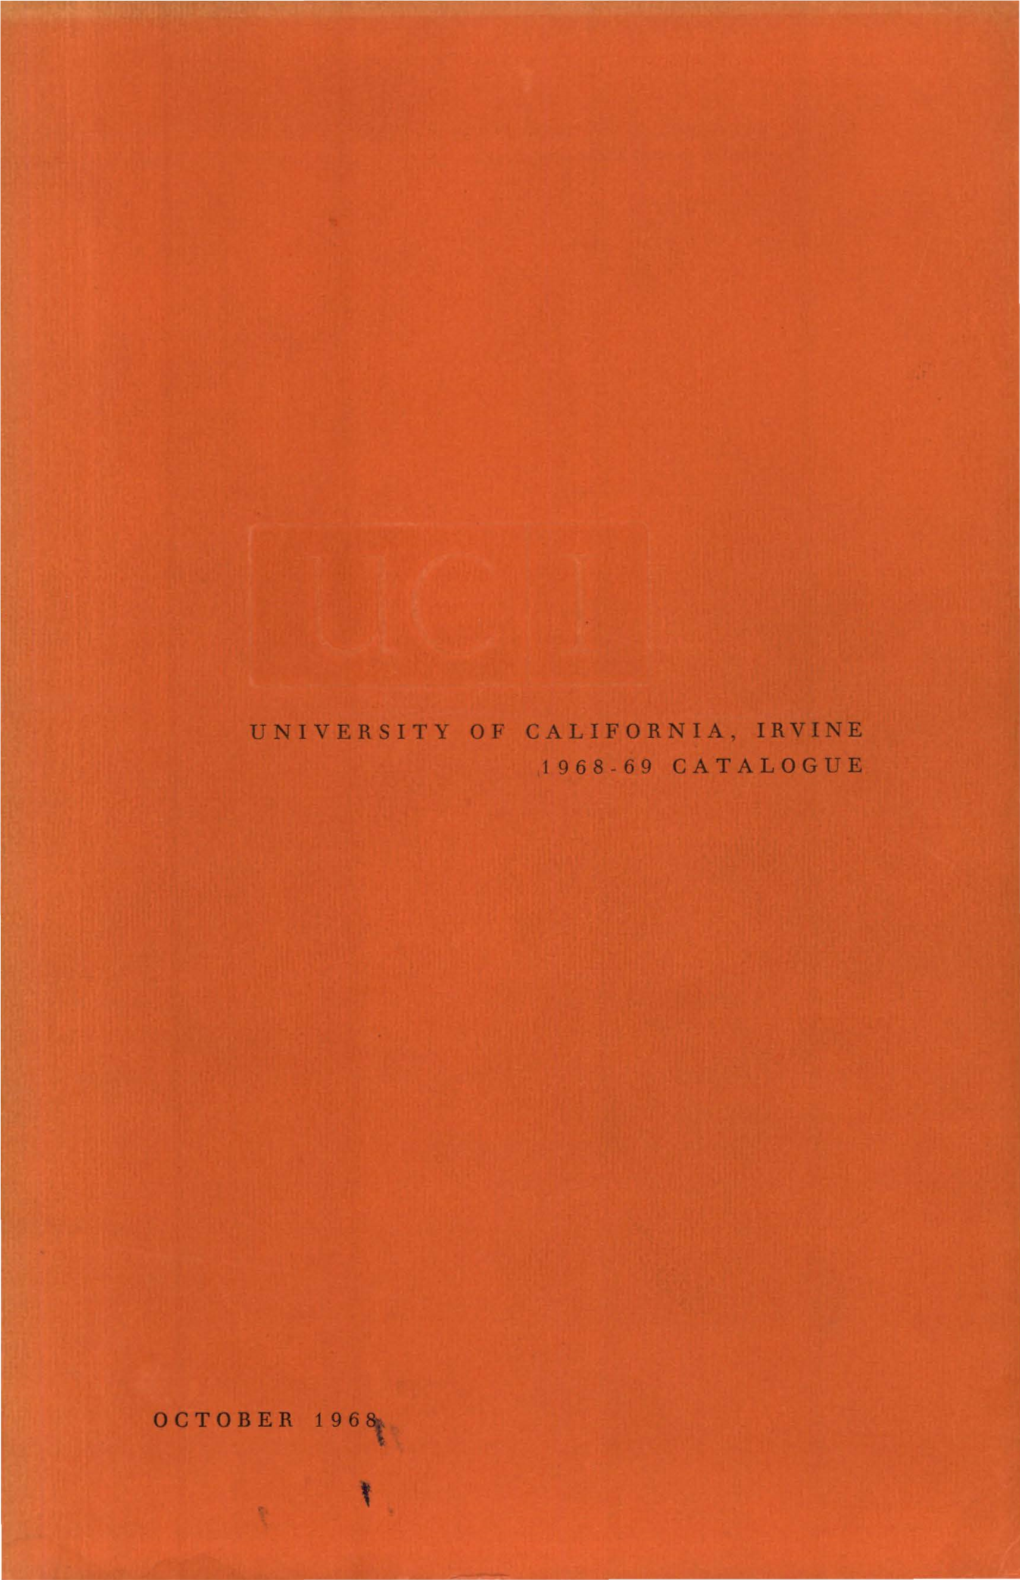 University of California, Irvine 1968 - 69 Catalogue